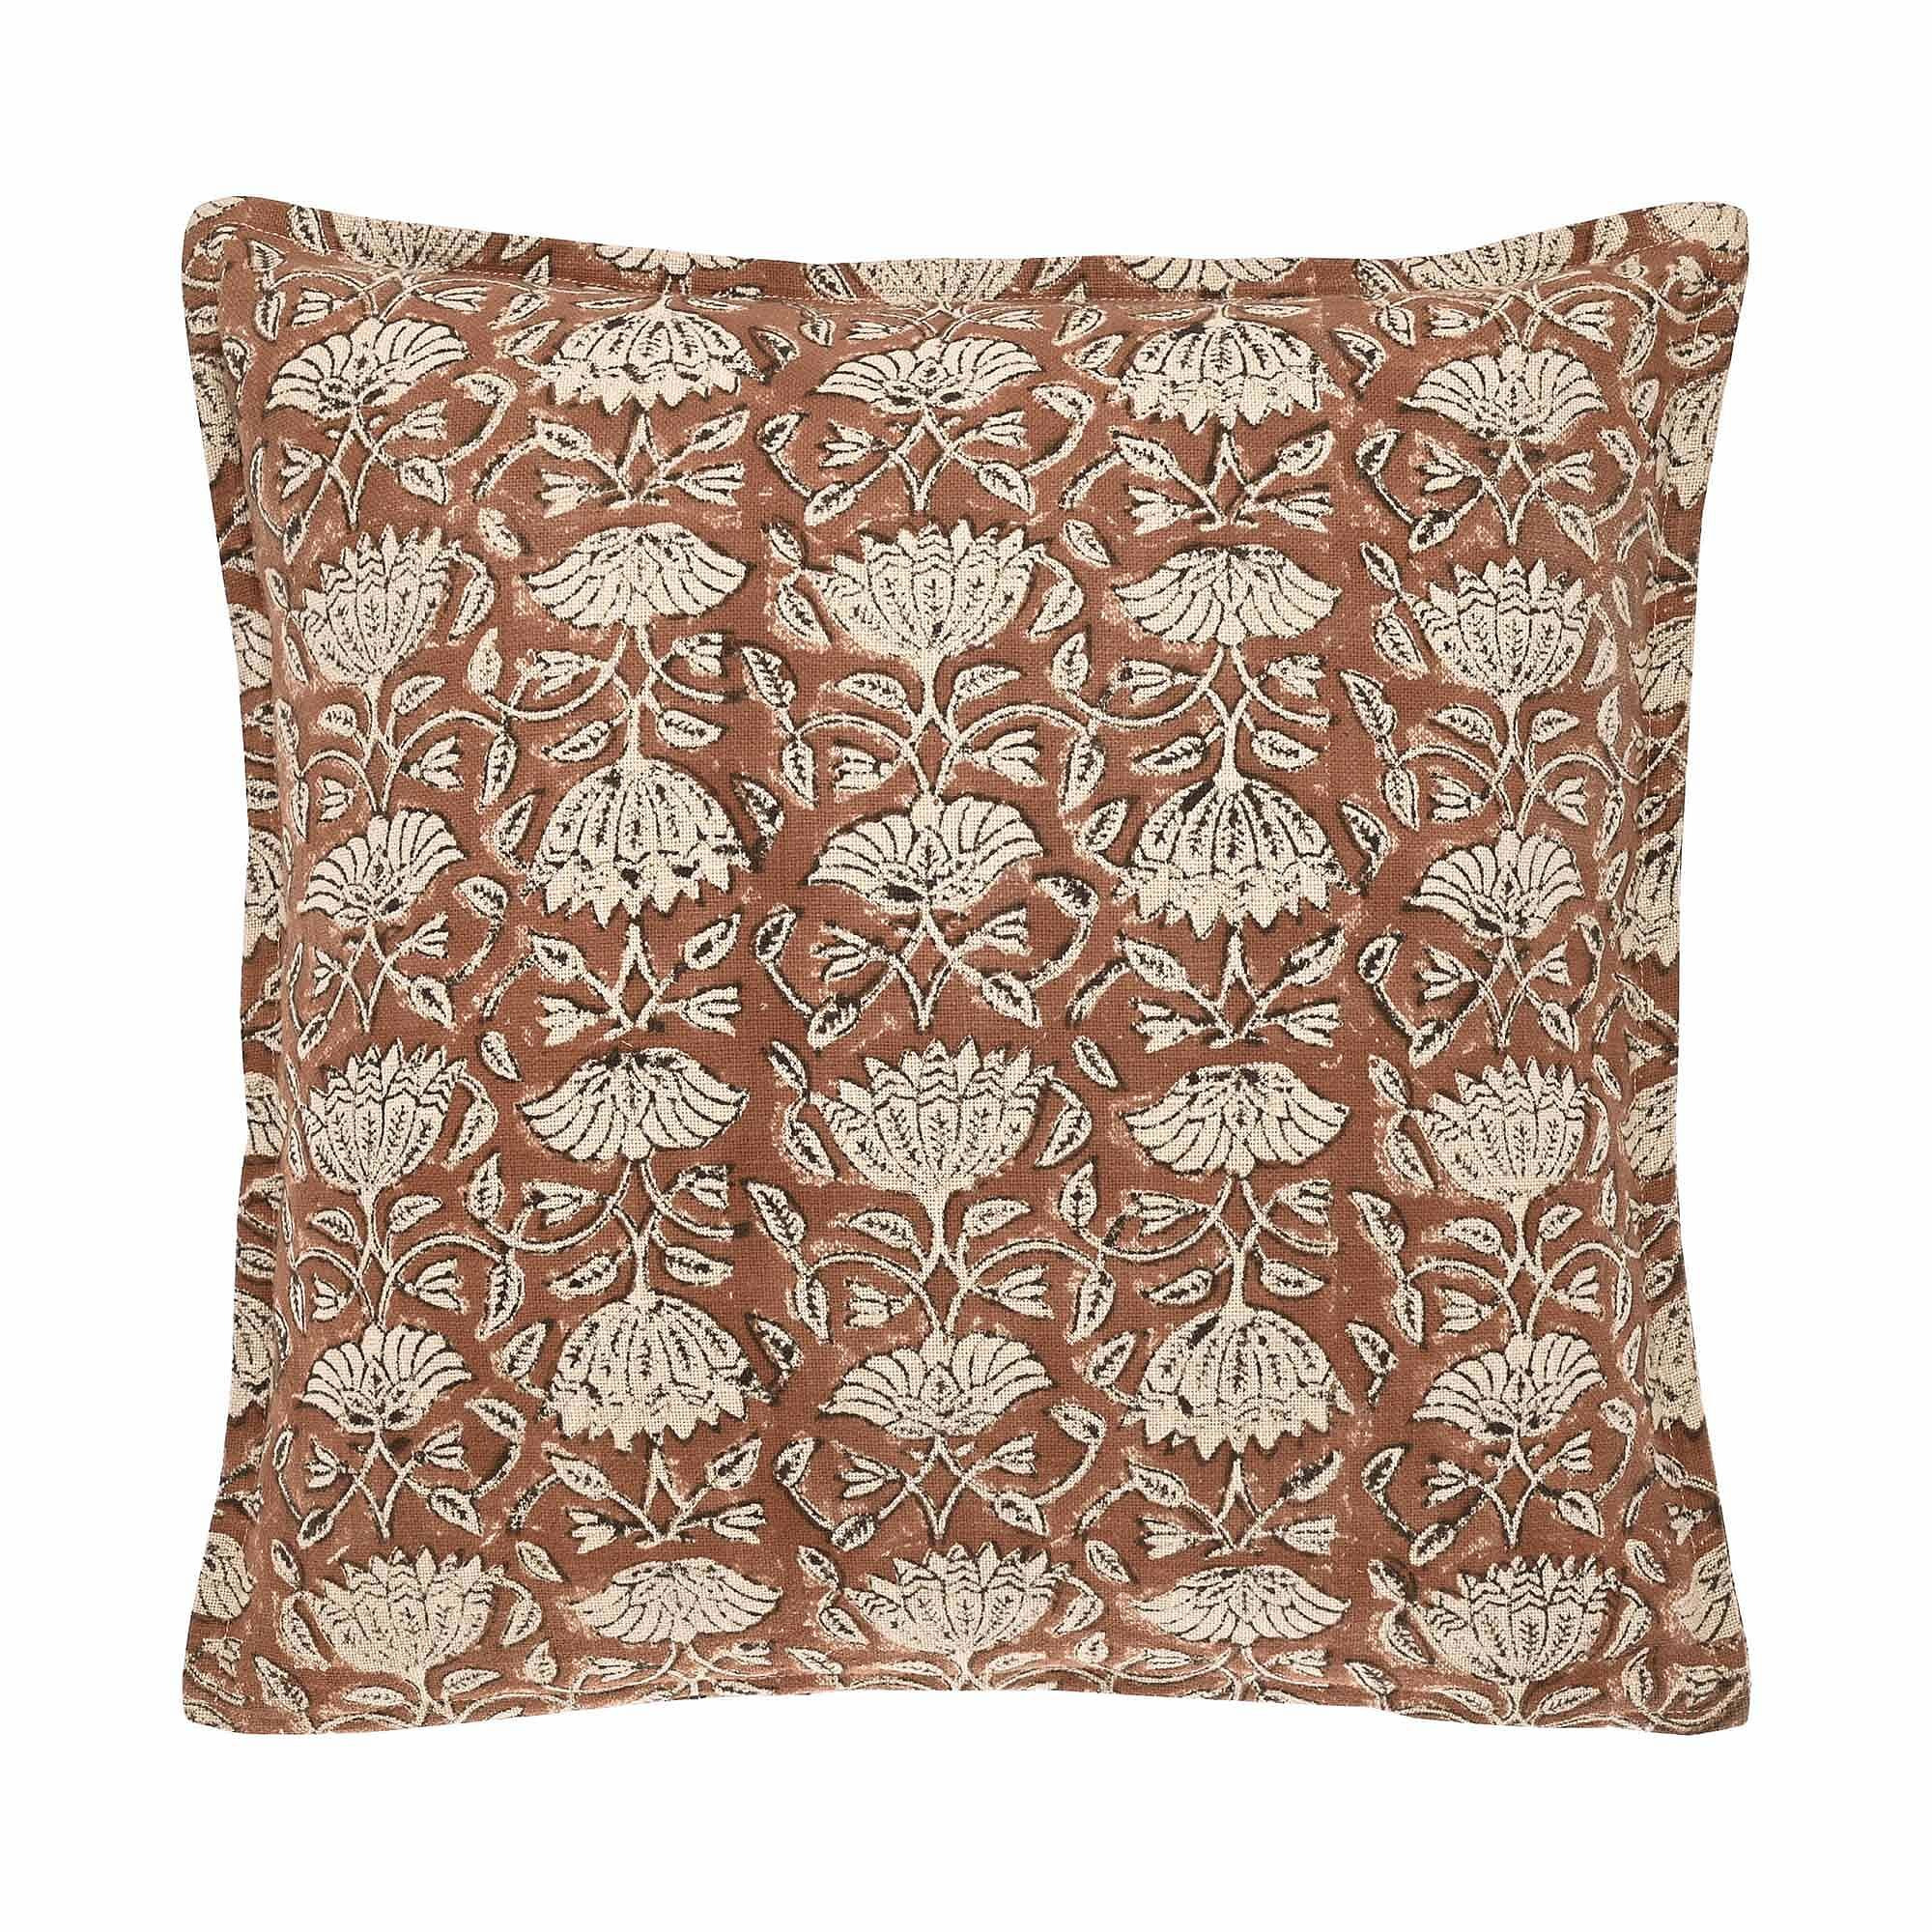 Handblock Print Cushion in Cinnamon Spice - image 1